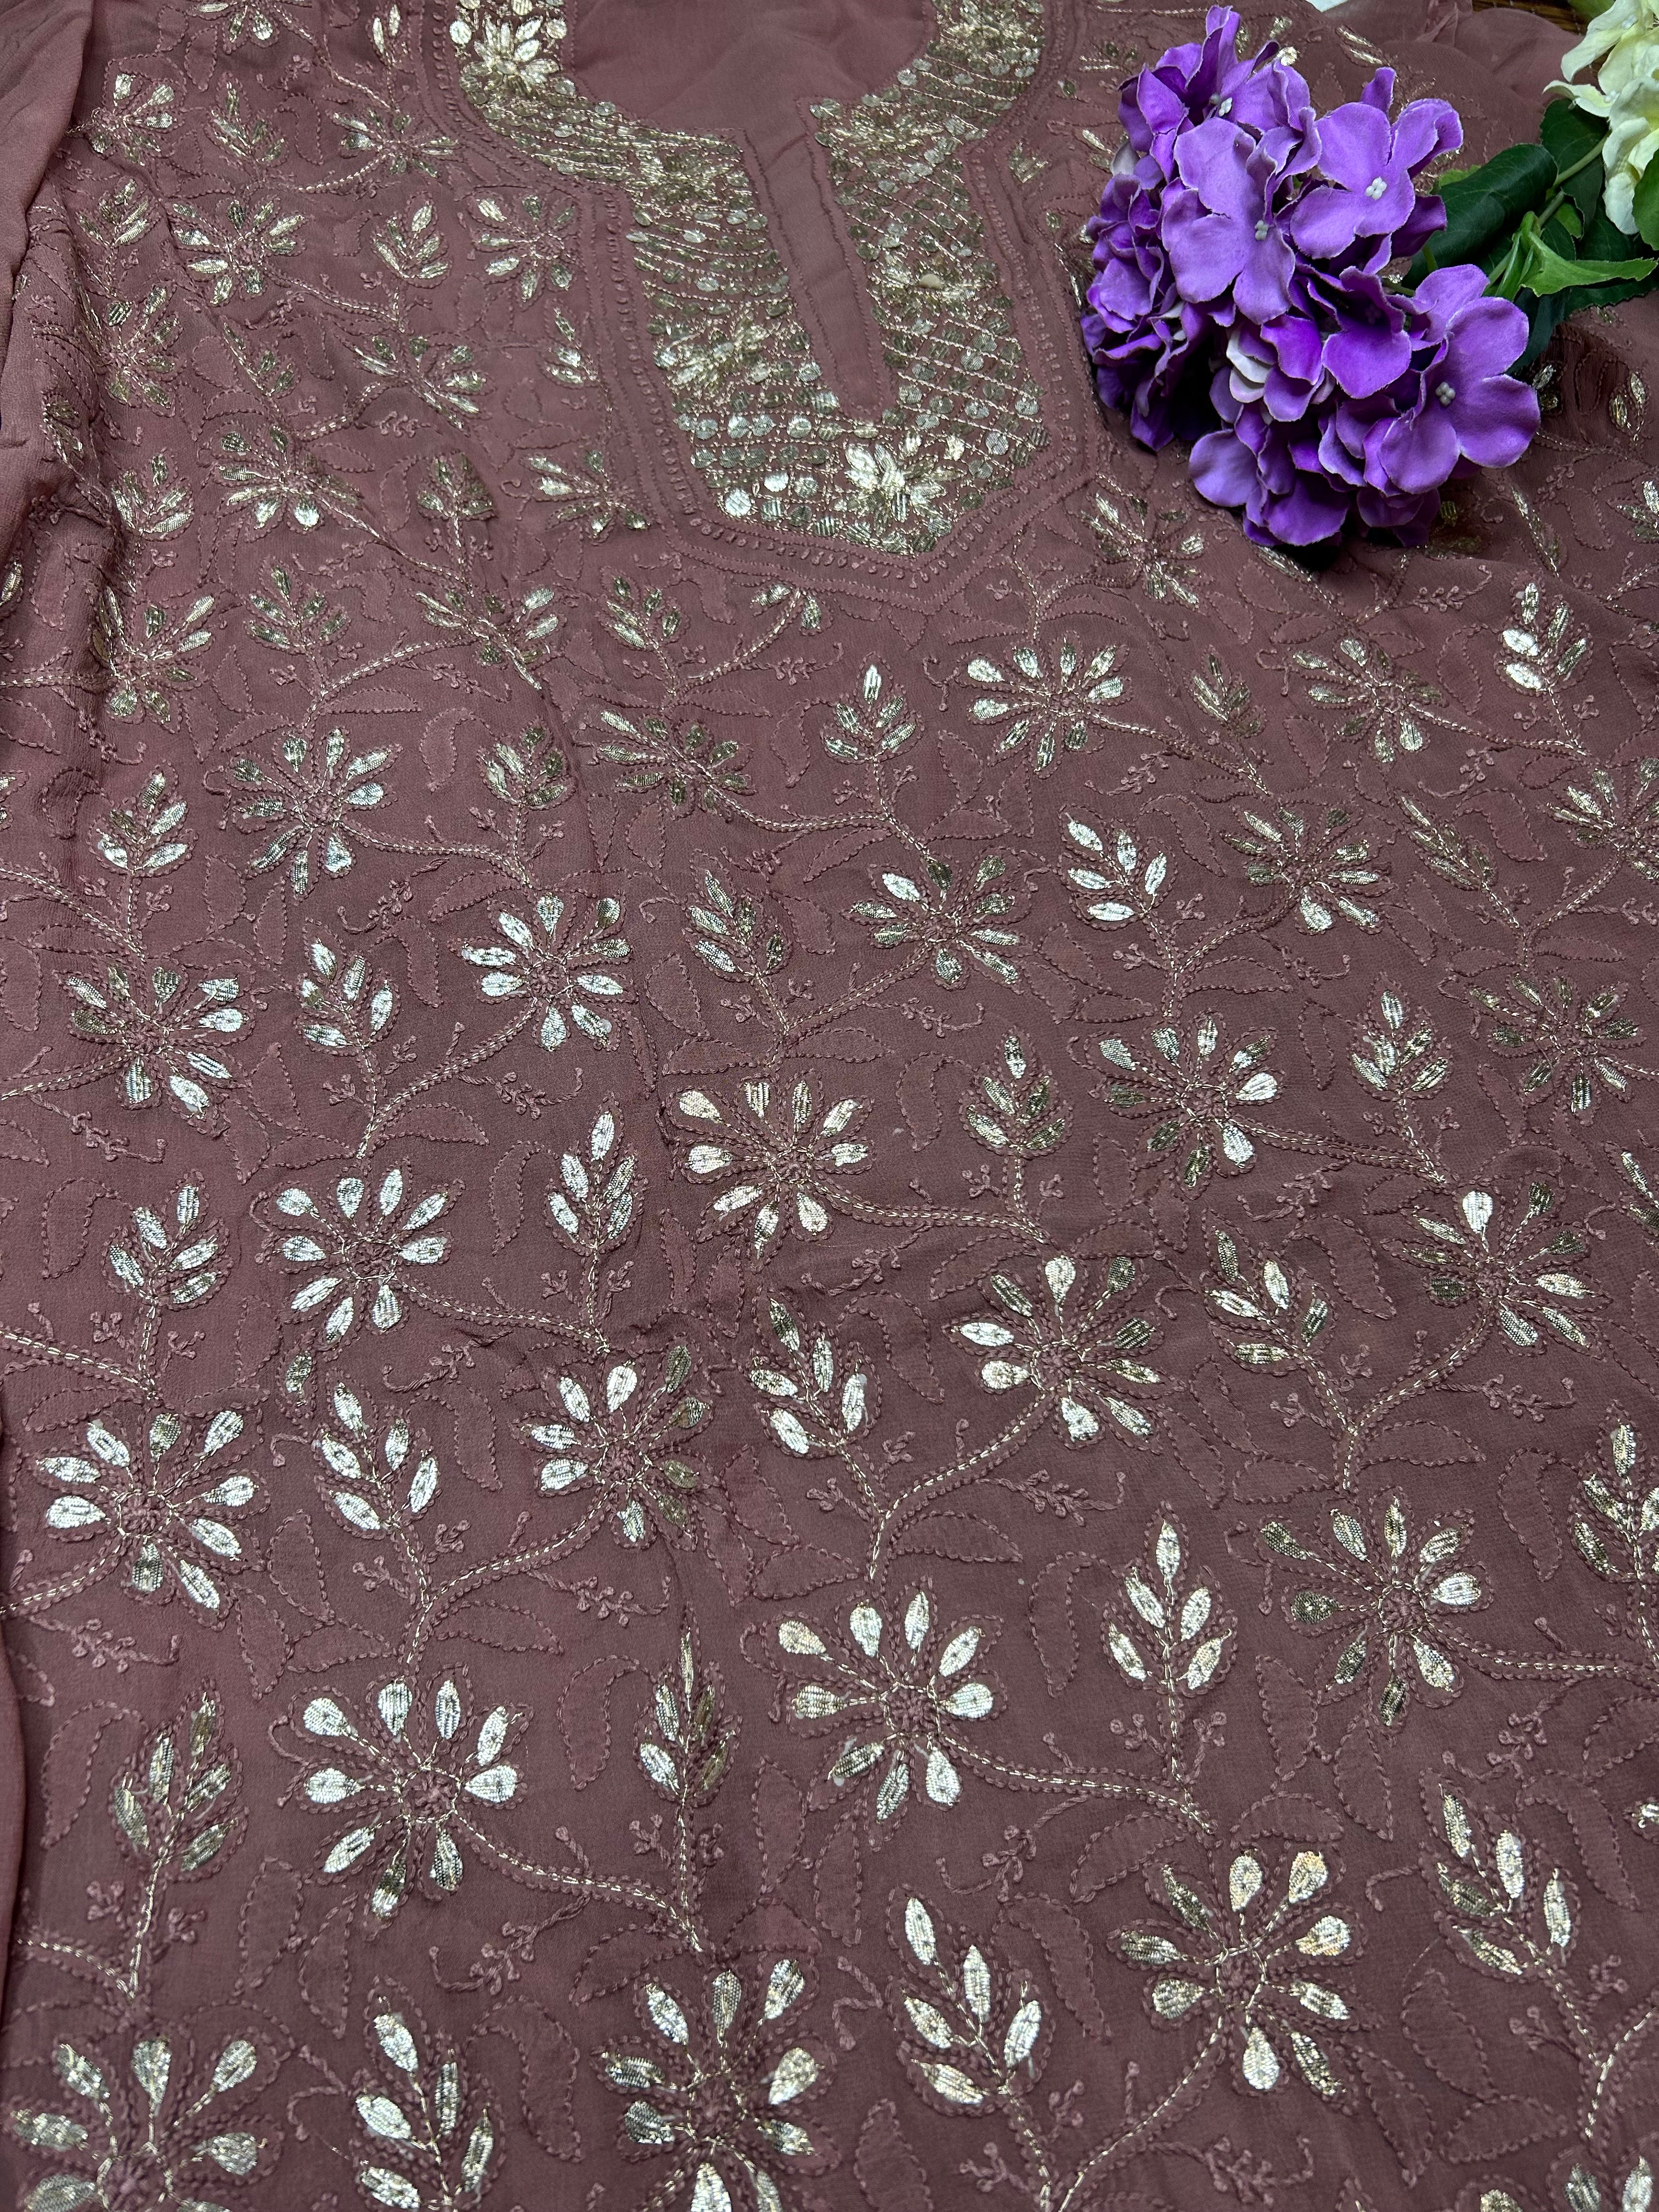 Chestnut Brown Gota work Chinkari on unstitched salwar kameez fabric